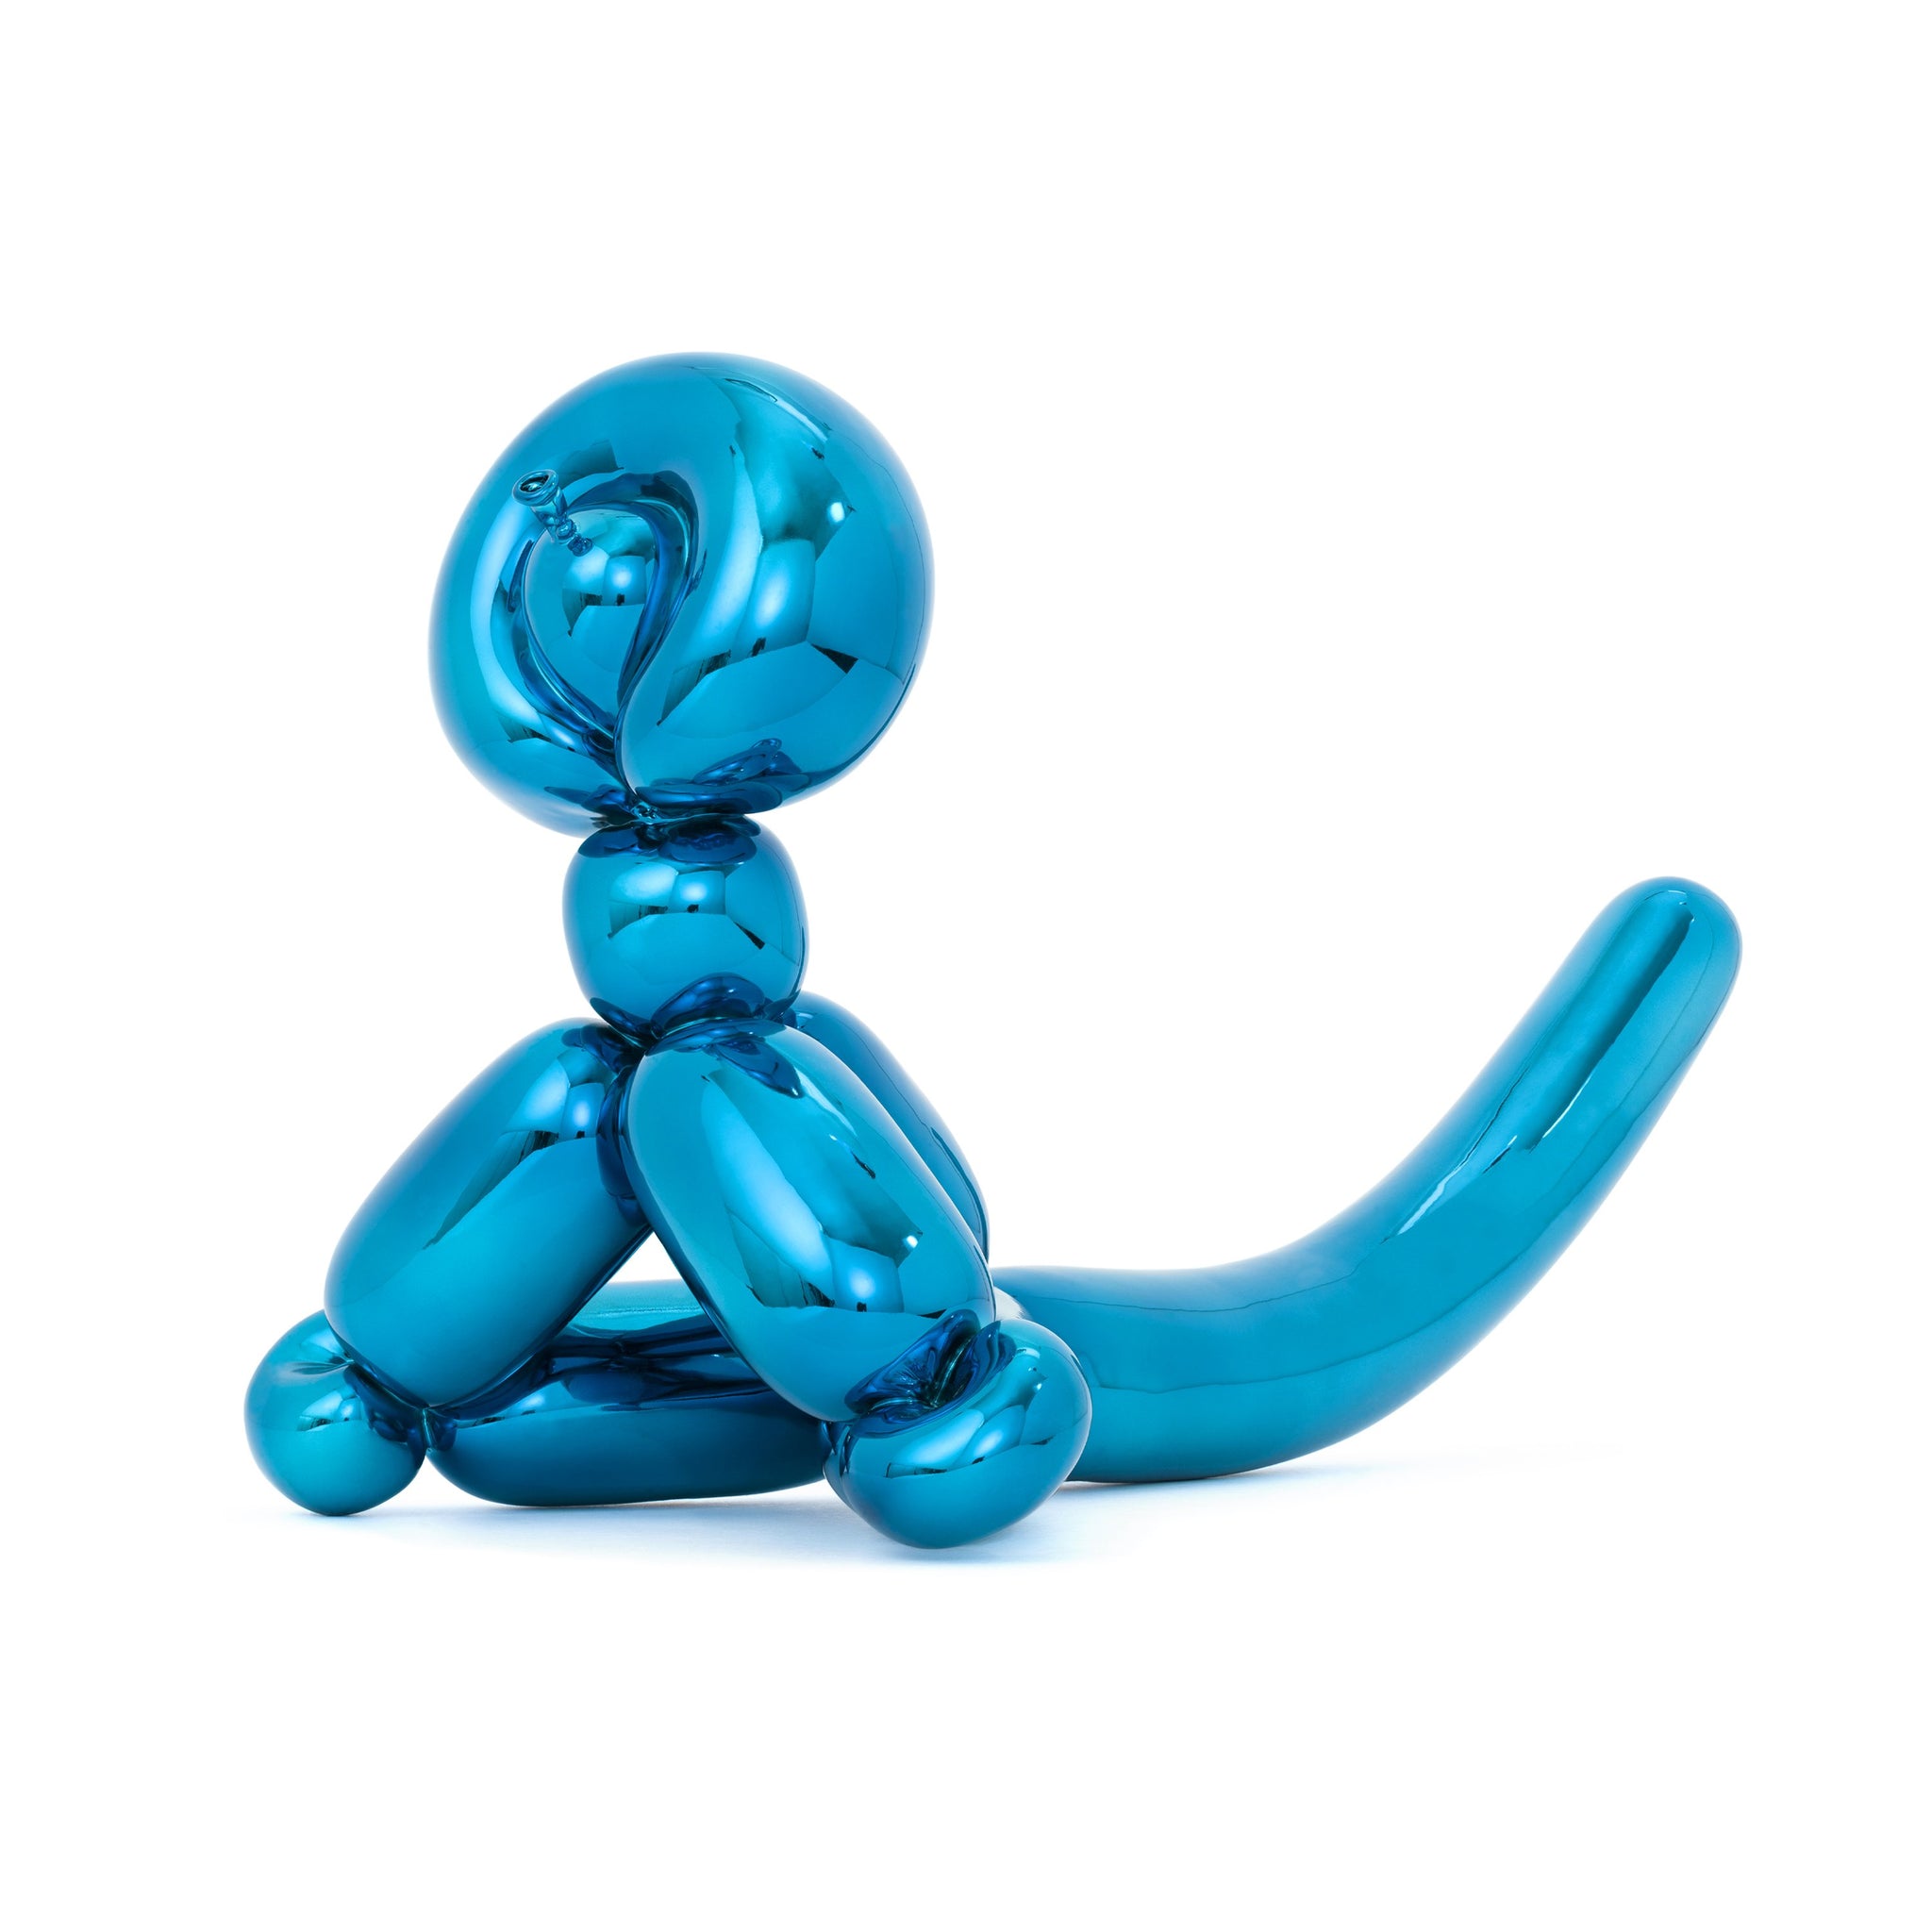 Jeff Koons: Balloon Monkey (Blue) edit